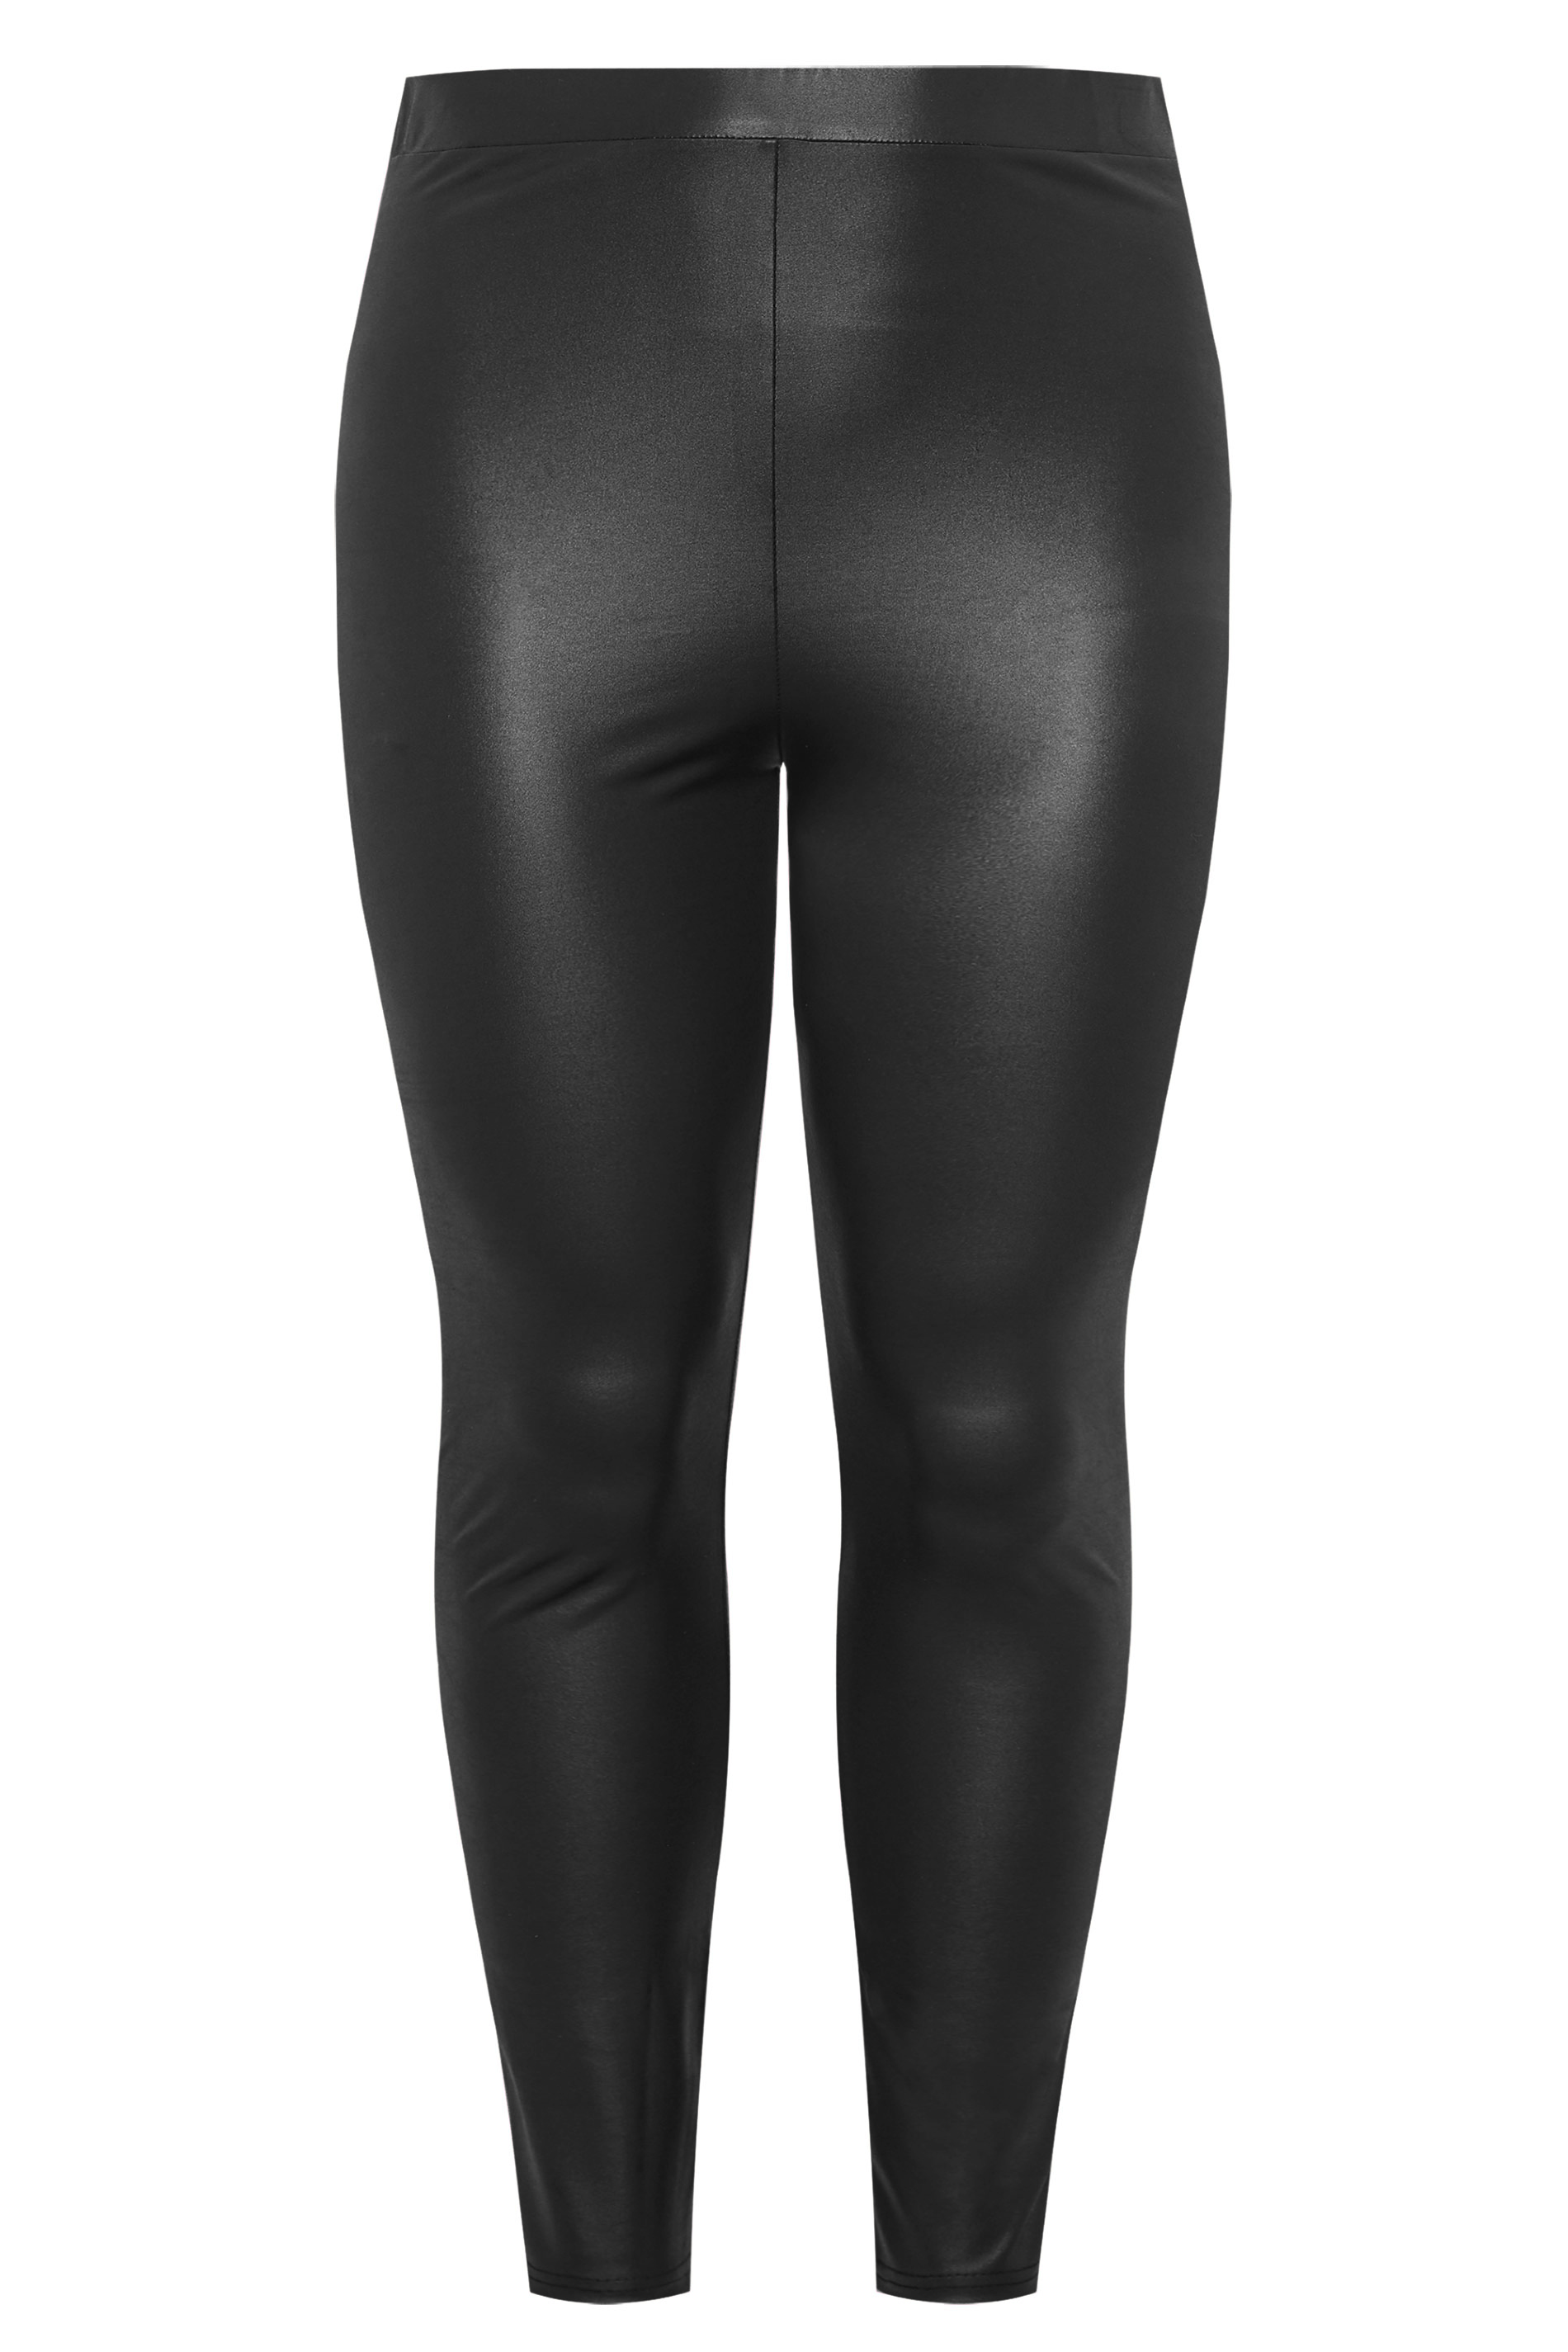 XL-5XL Women Leather Leggings High Waist Pants Stretchy Faux Leather Leggings  Plus Size